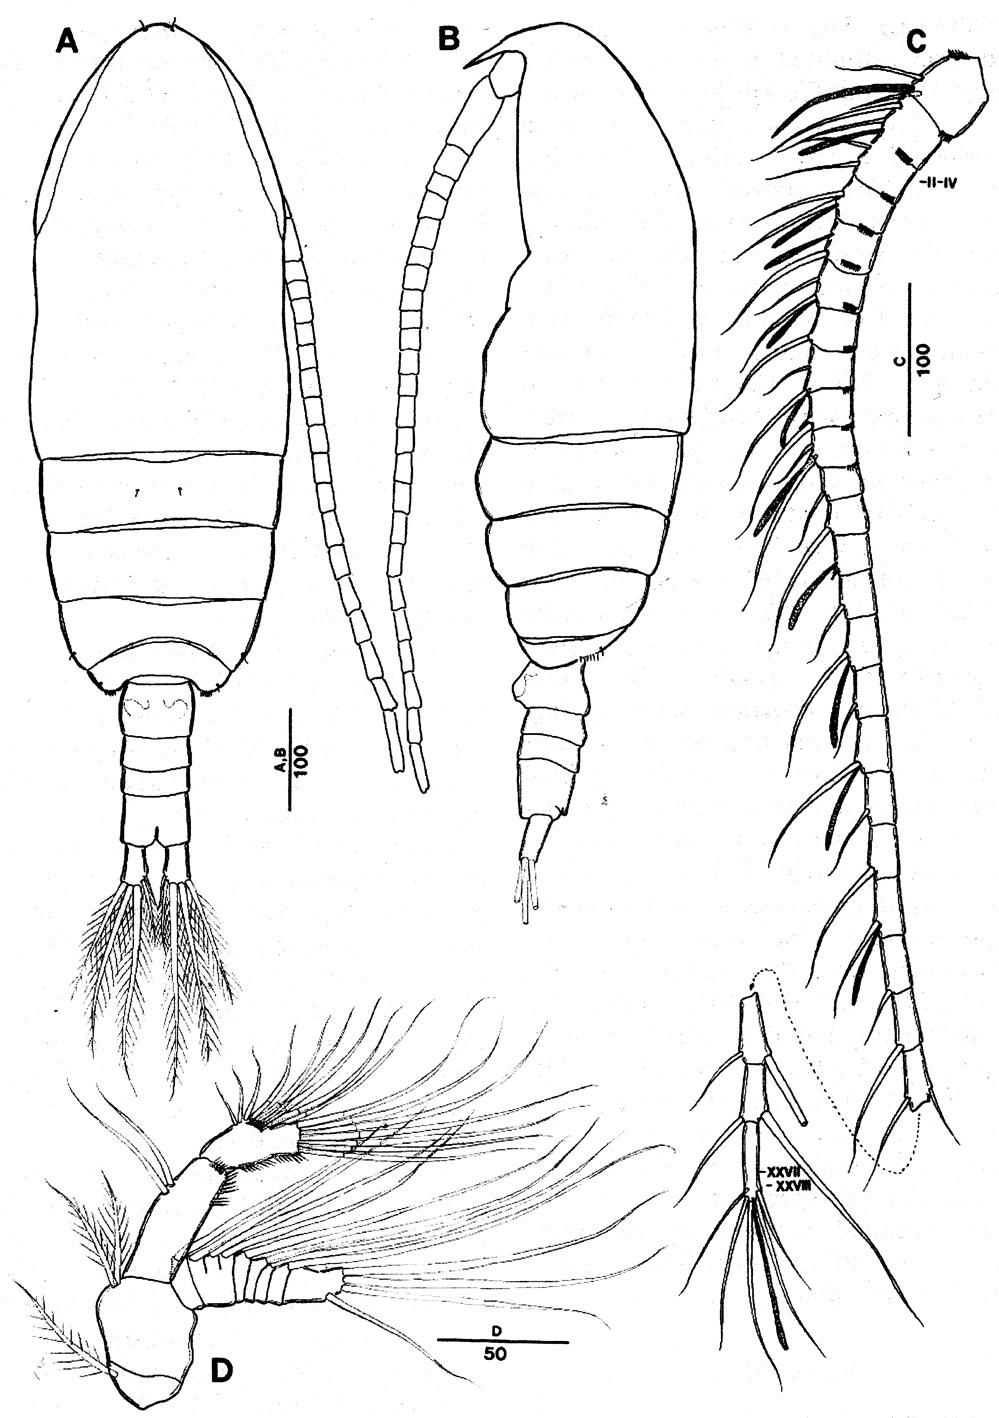 Species Bestiolina coreana - Plate 1 of morphological figures